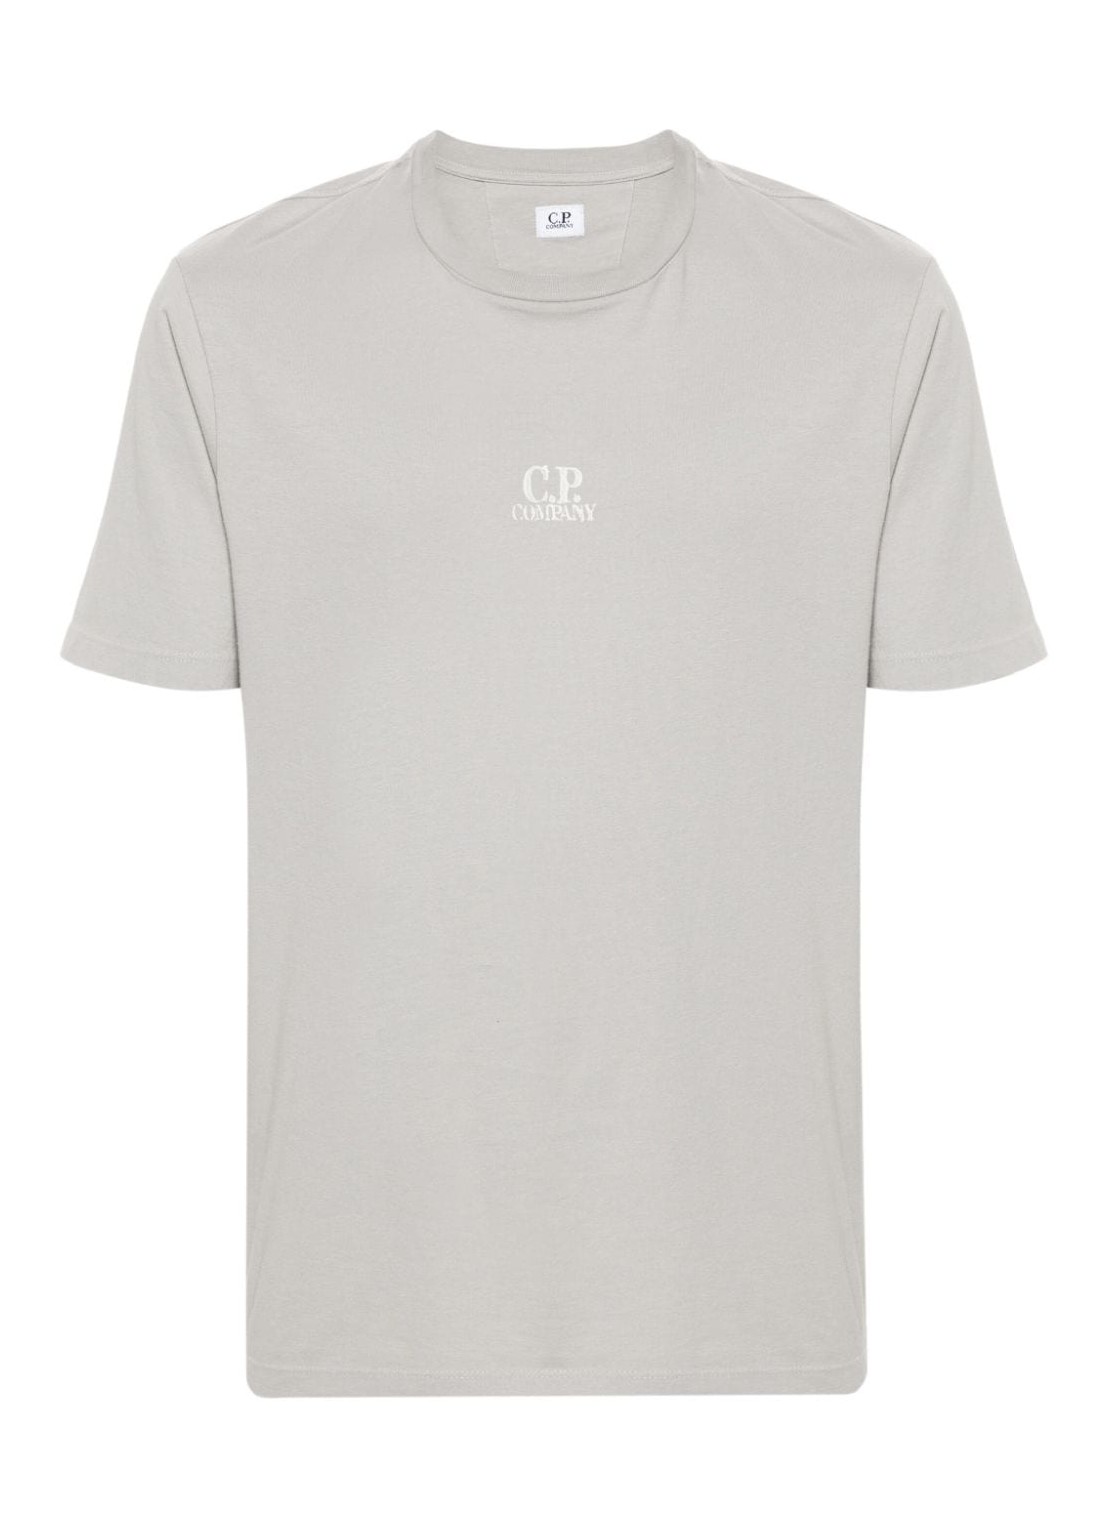 Camiseta c.p.company t-shirt man24/1 jersey artisanal three cards t-shirt - 16cmts288a005431g 913 ta